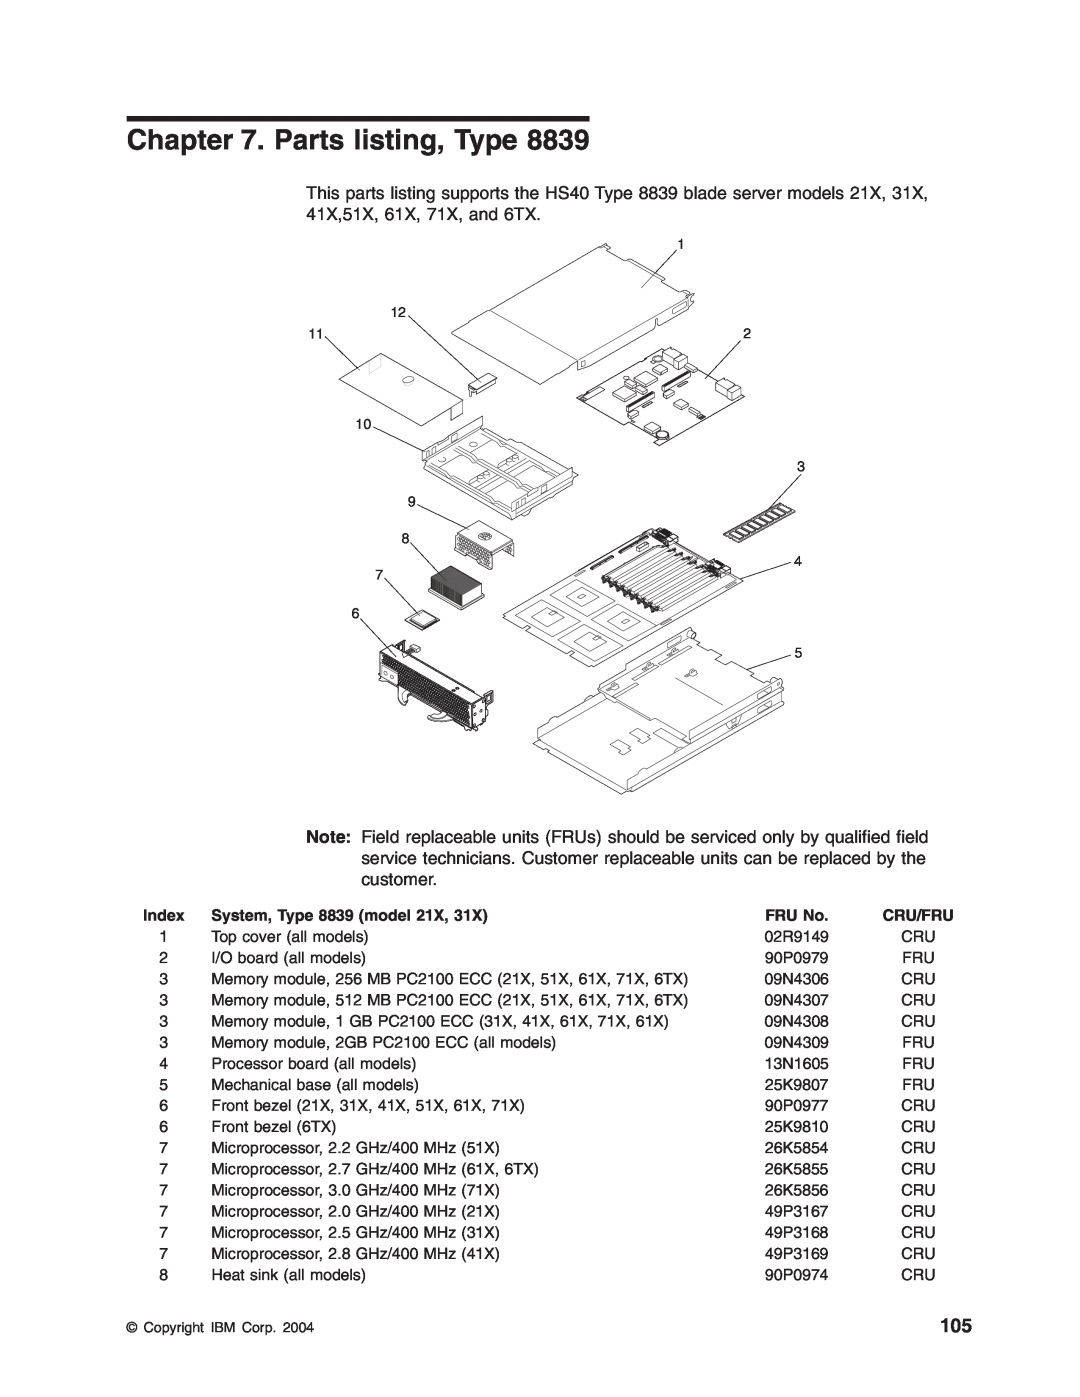 IBM HS40 manual Parts listing, Type, Index, System, Type 8839 model 21X, FRU No, Cru/Fru 